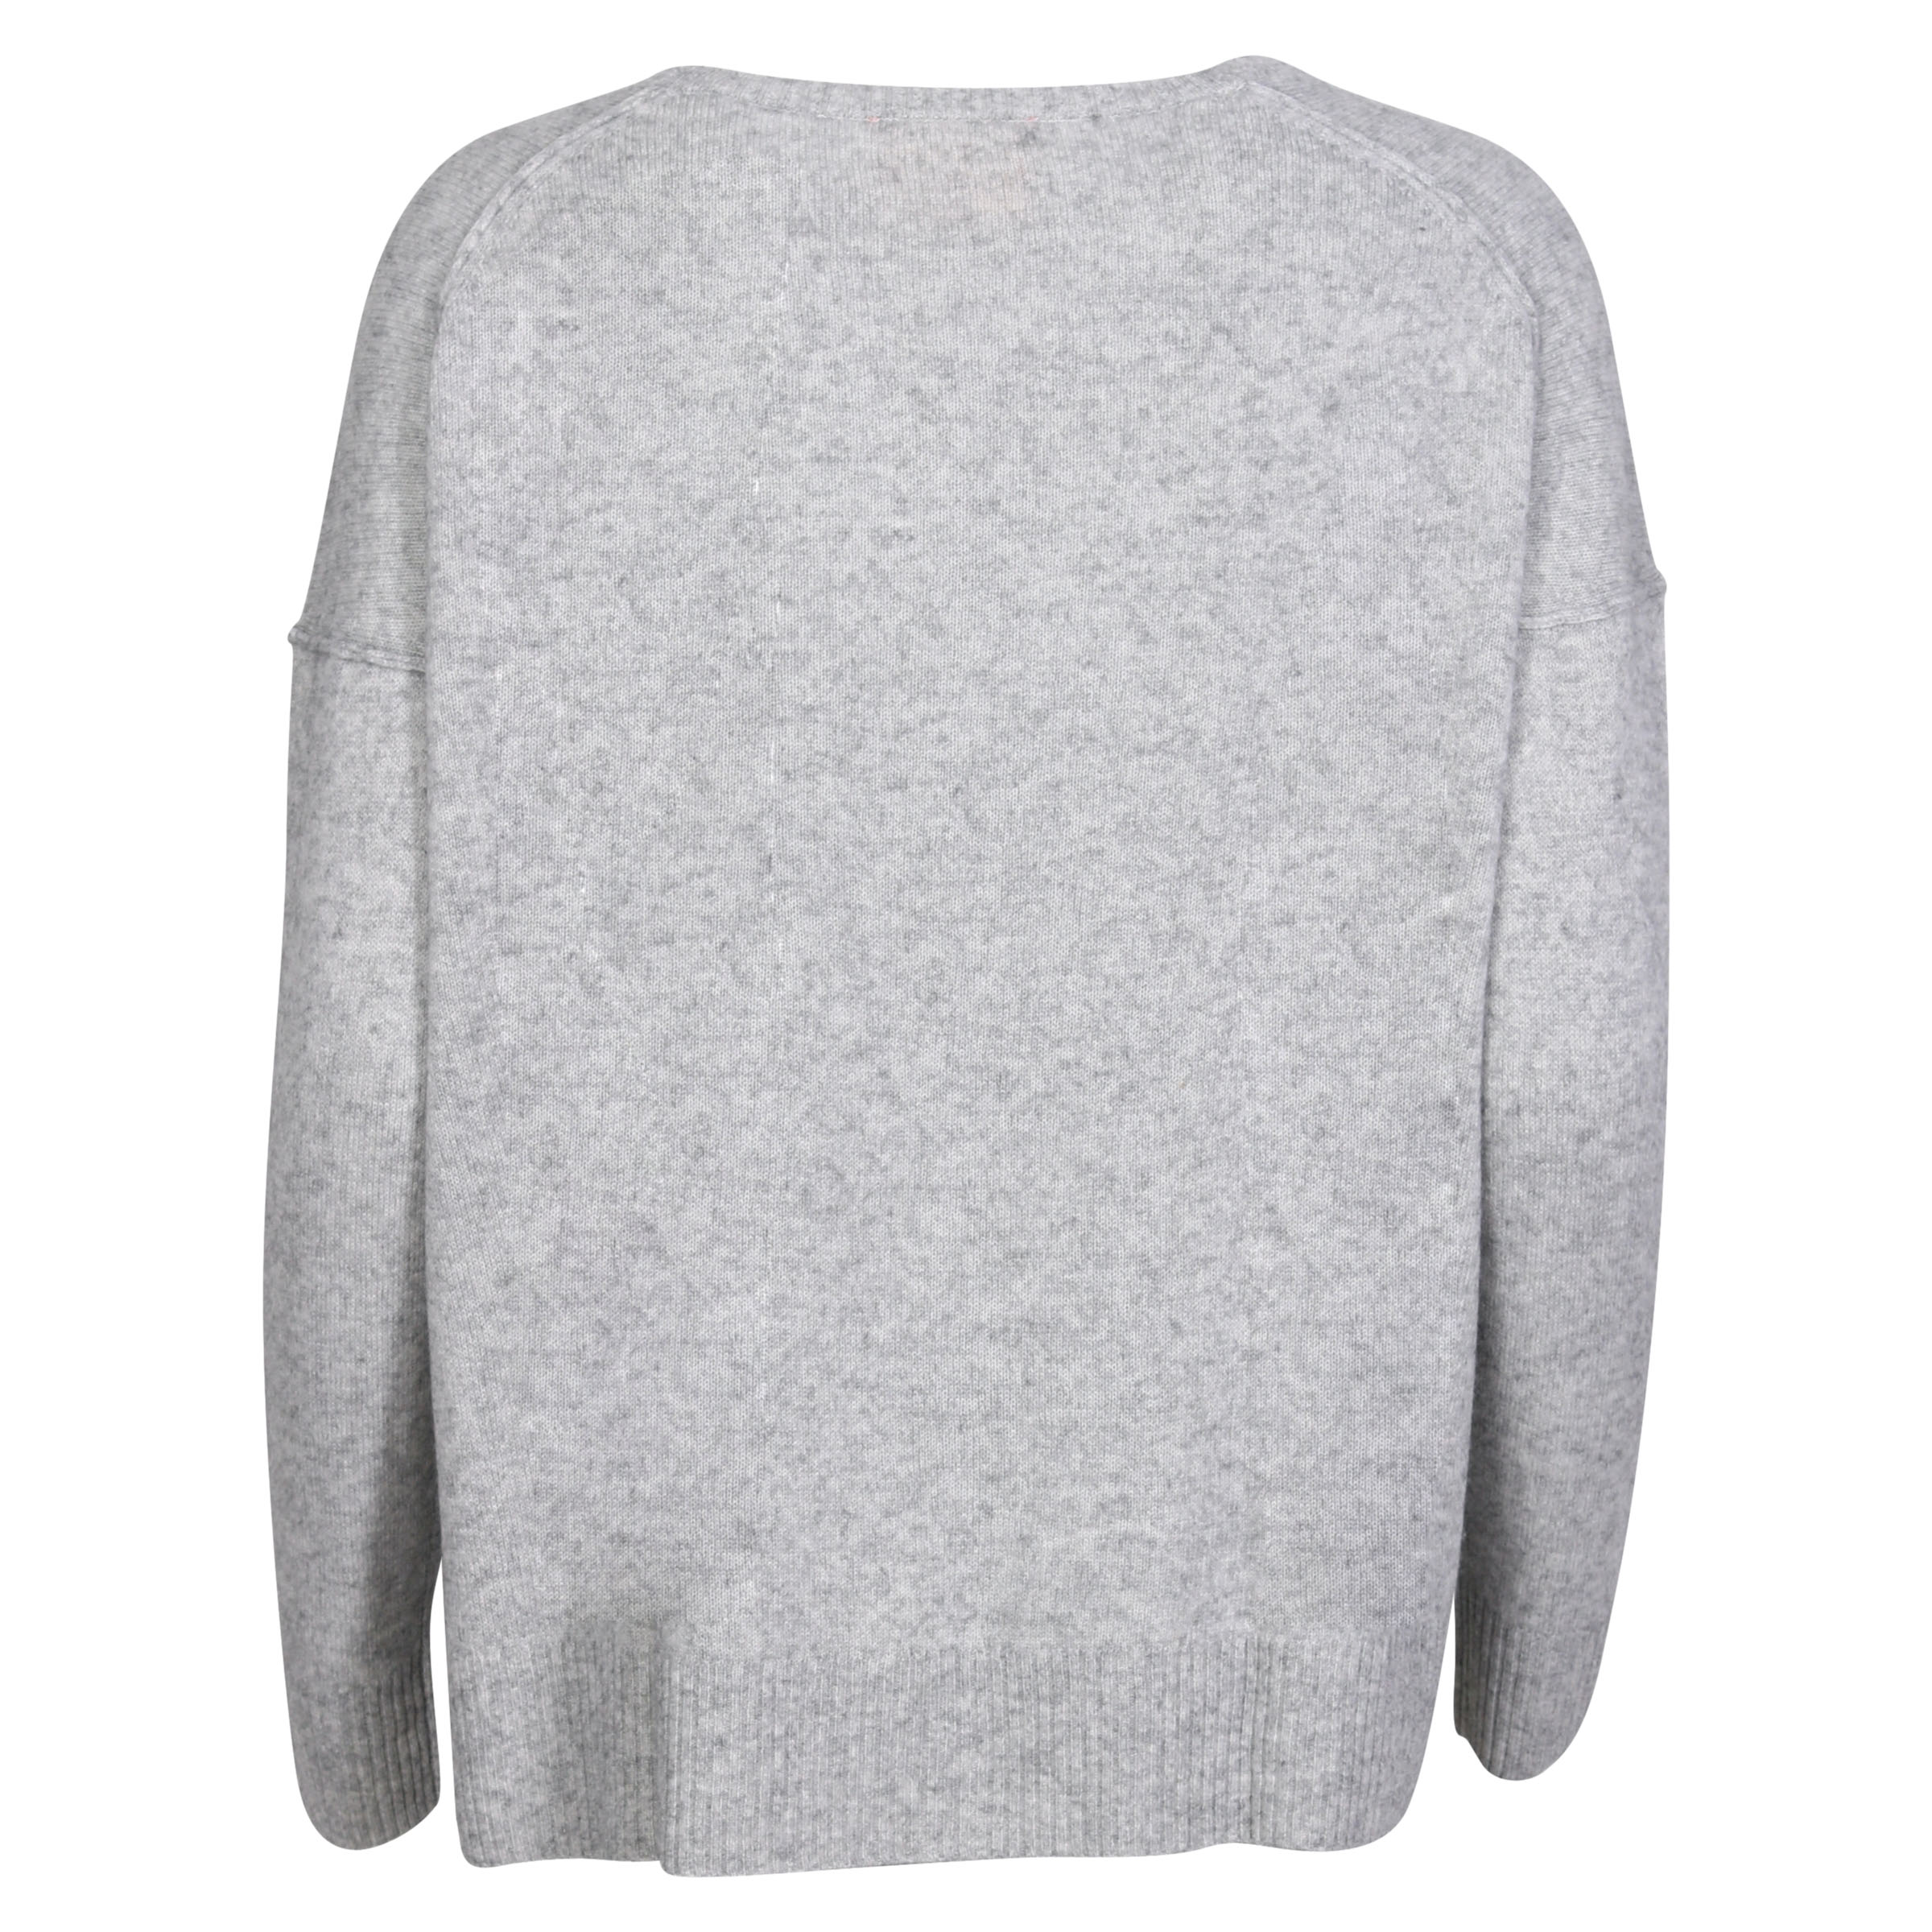 Absolut Cashmere Oversized Sweater Kenza Light Grey Melange L